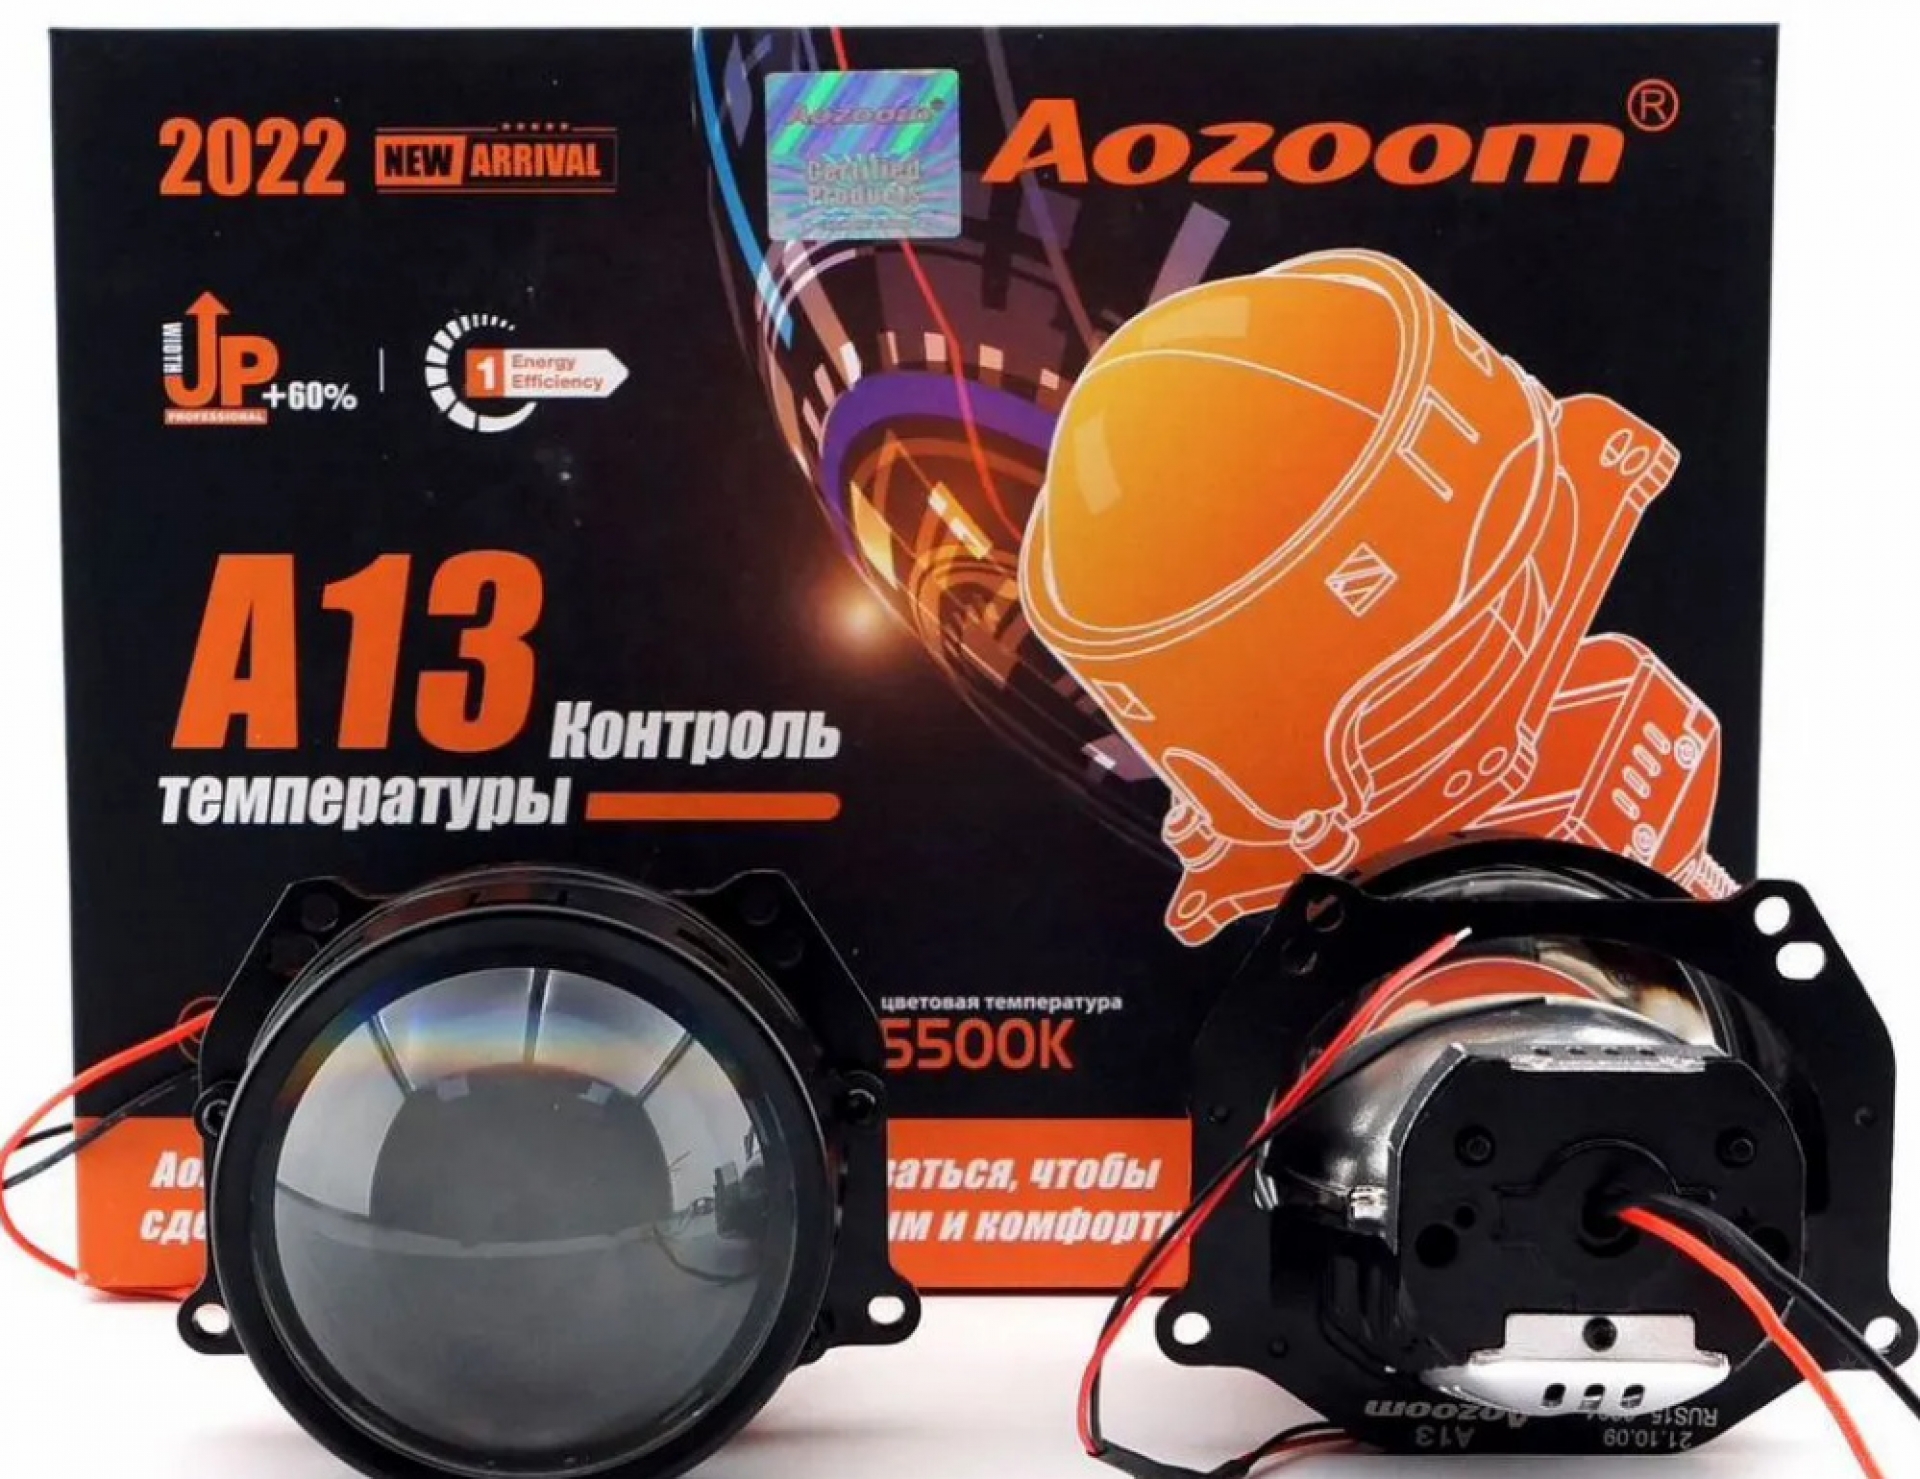 Aozoom bi led 3.0. Bi-led модули Aozoom a3 Max. Билед модули Aozoom a13 2022. Bi-led линз Aozoom a13. Aozoom a13 bi-led.